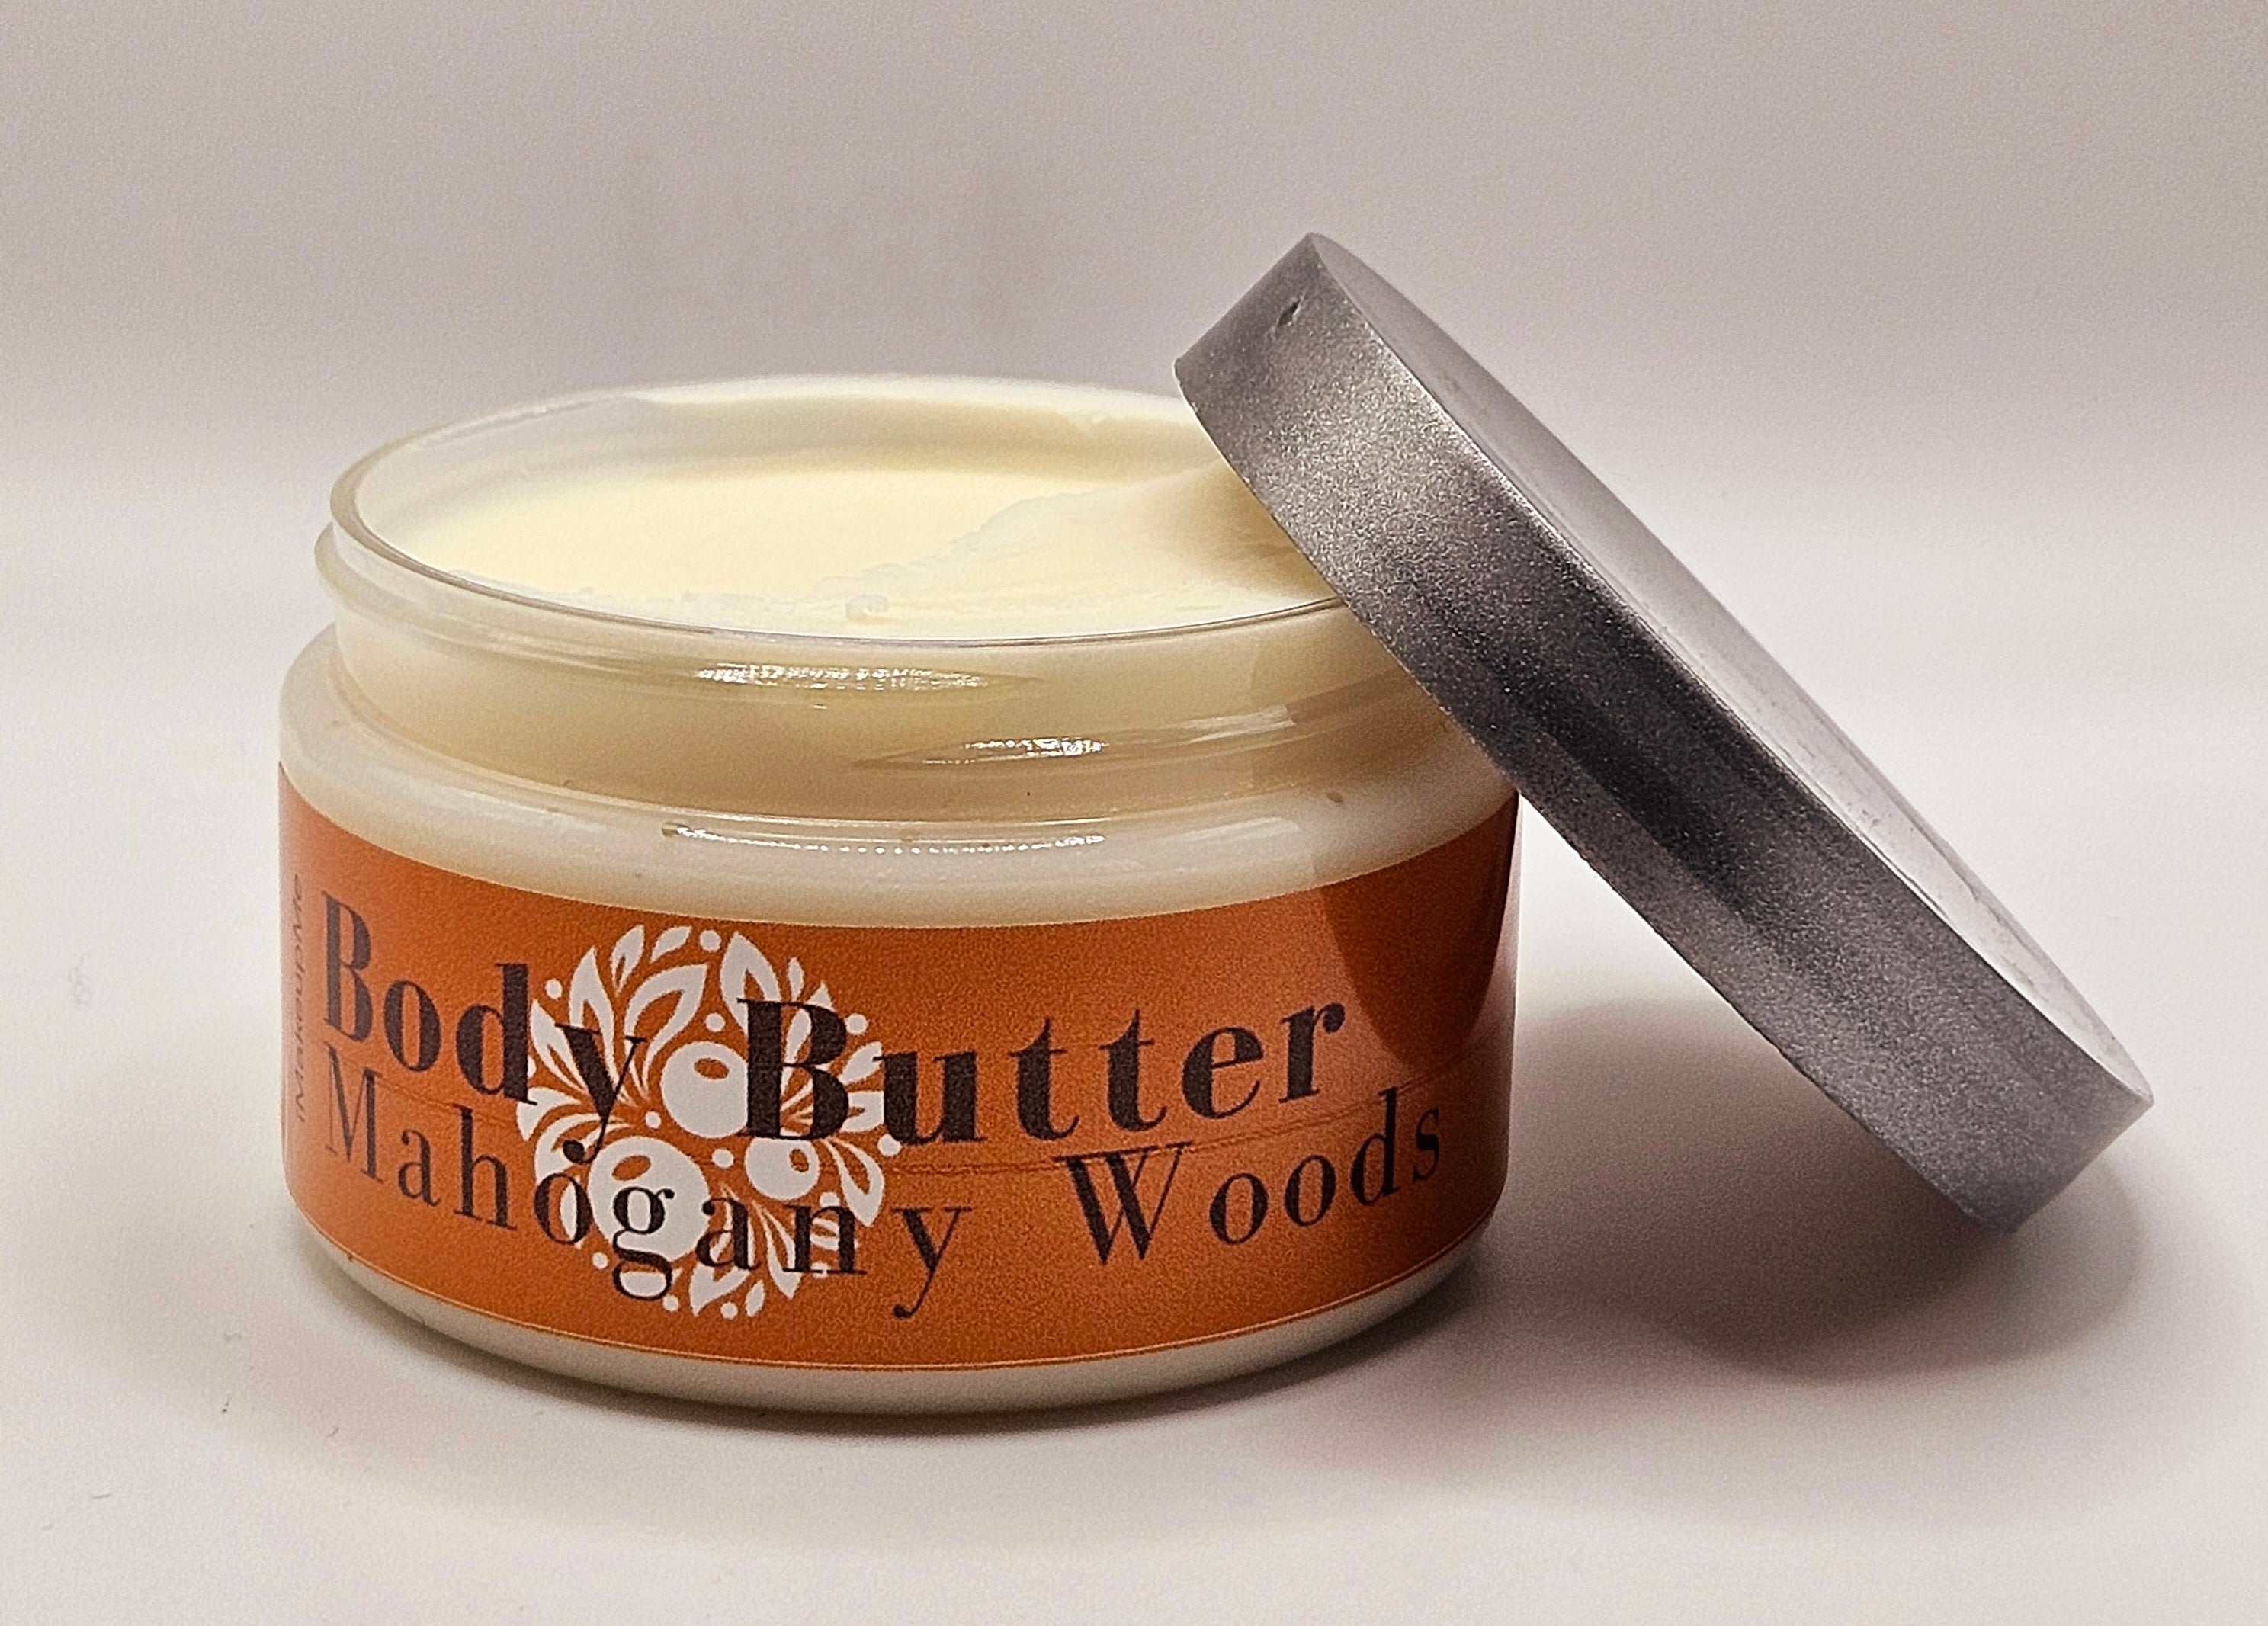 Mahogany Woods Body Butter